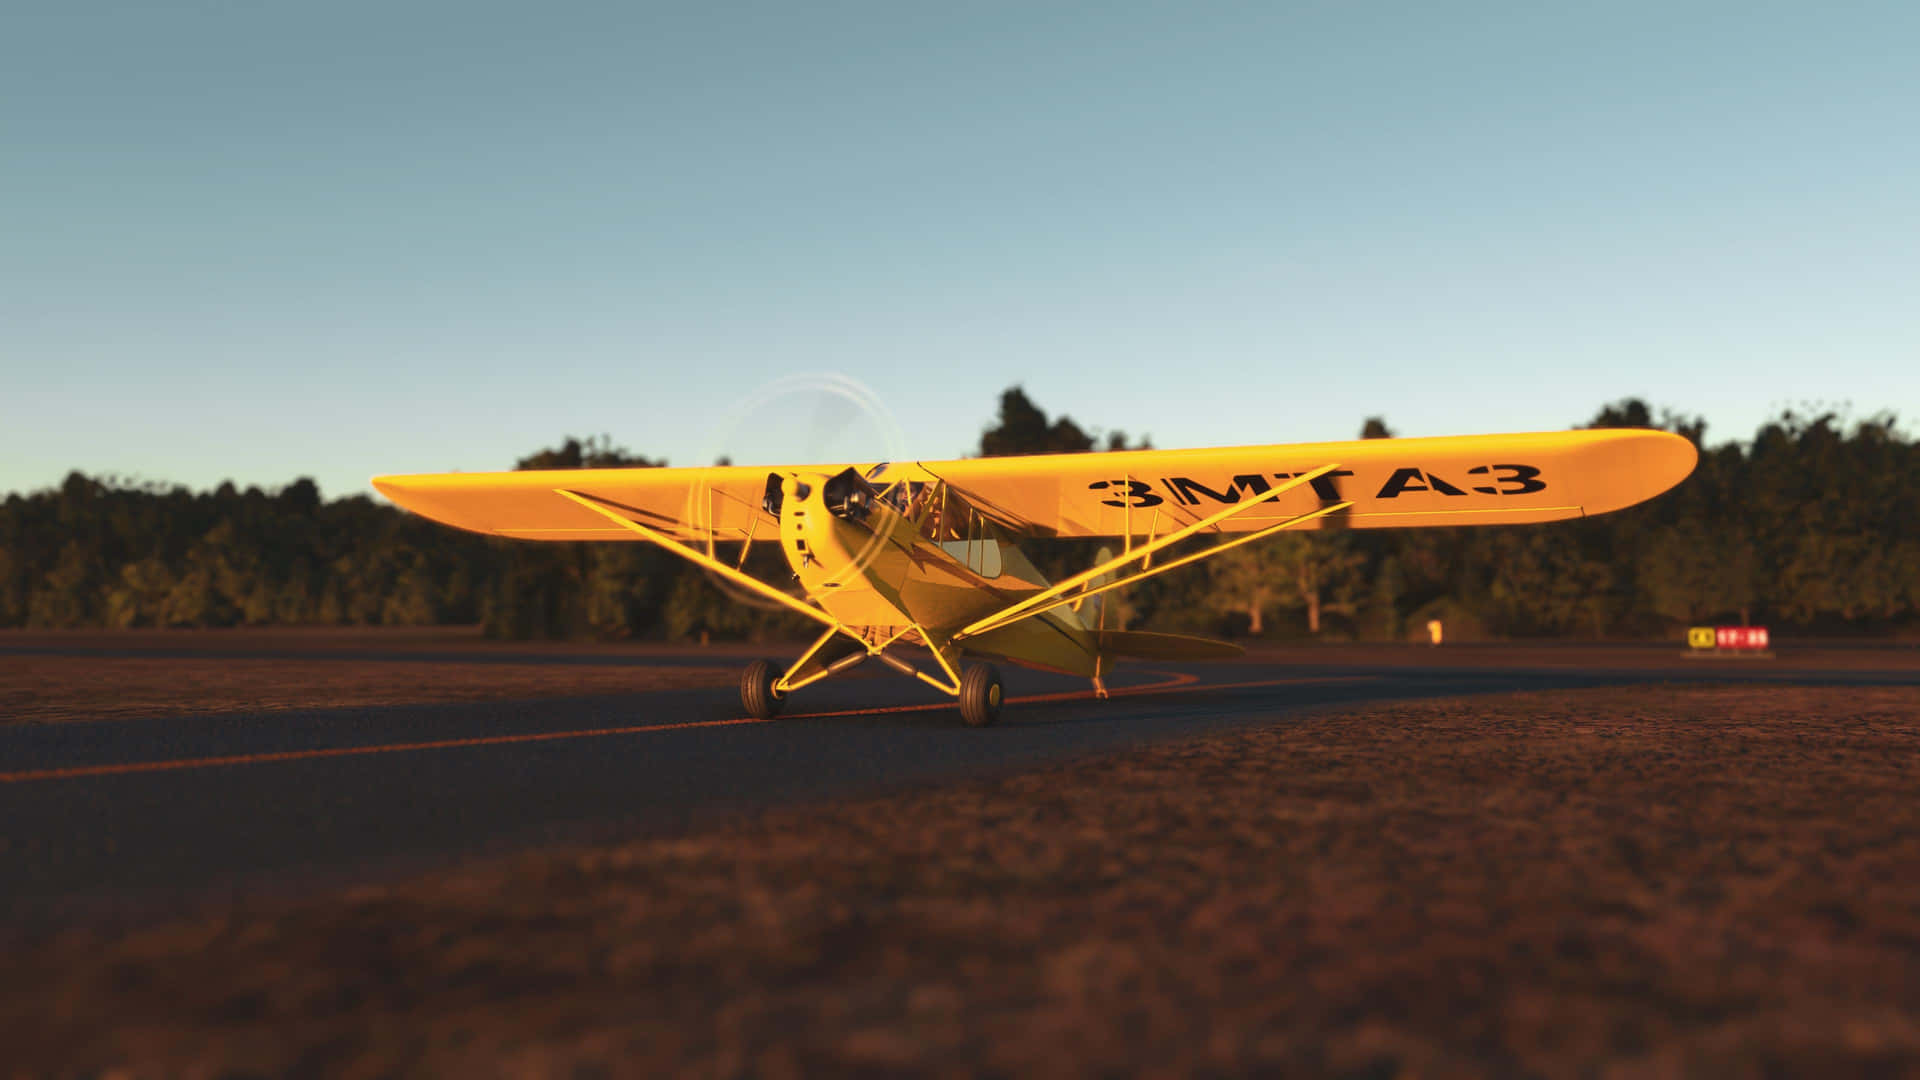 4kmicrosoft Flight Simulator Bakgrund Gul Flygplan